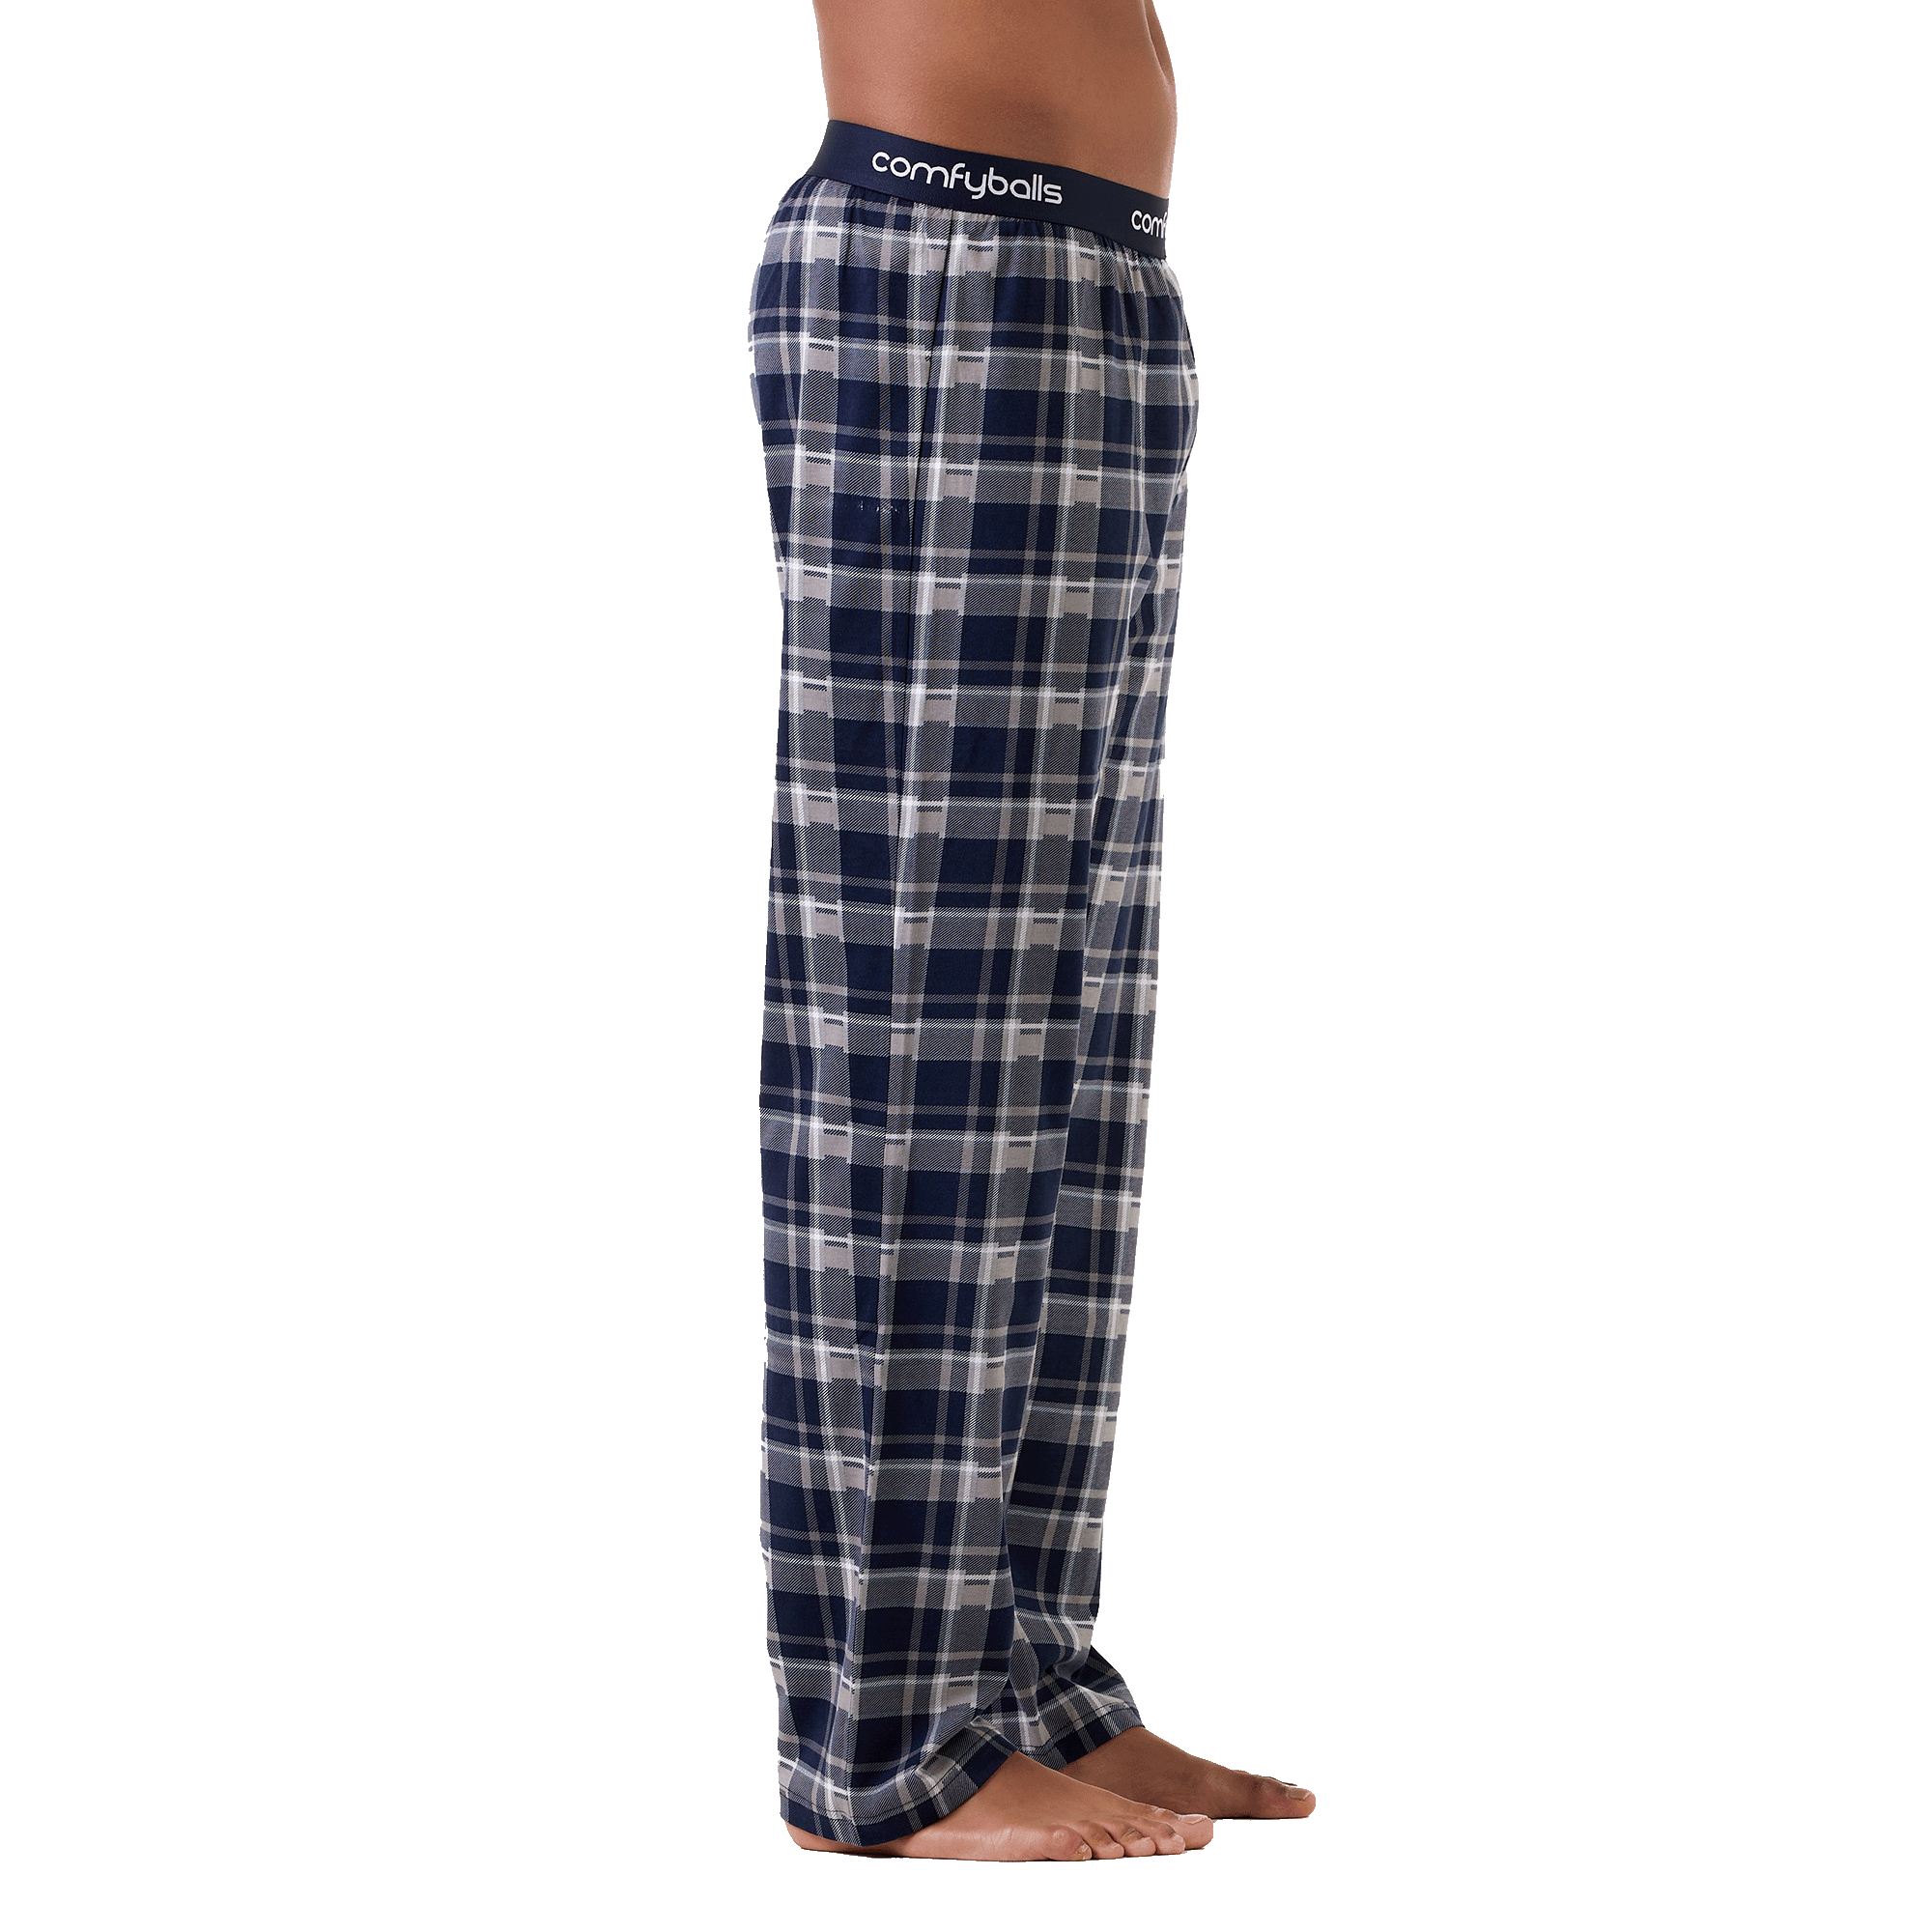 NAVY Pyjama Pants Man & NAVY Tee